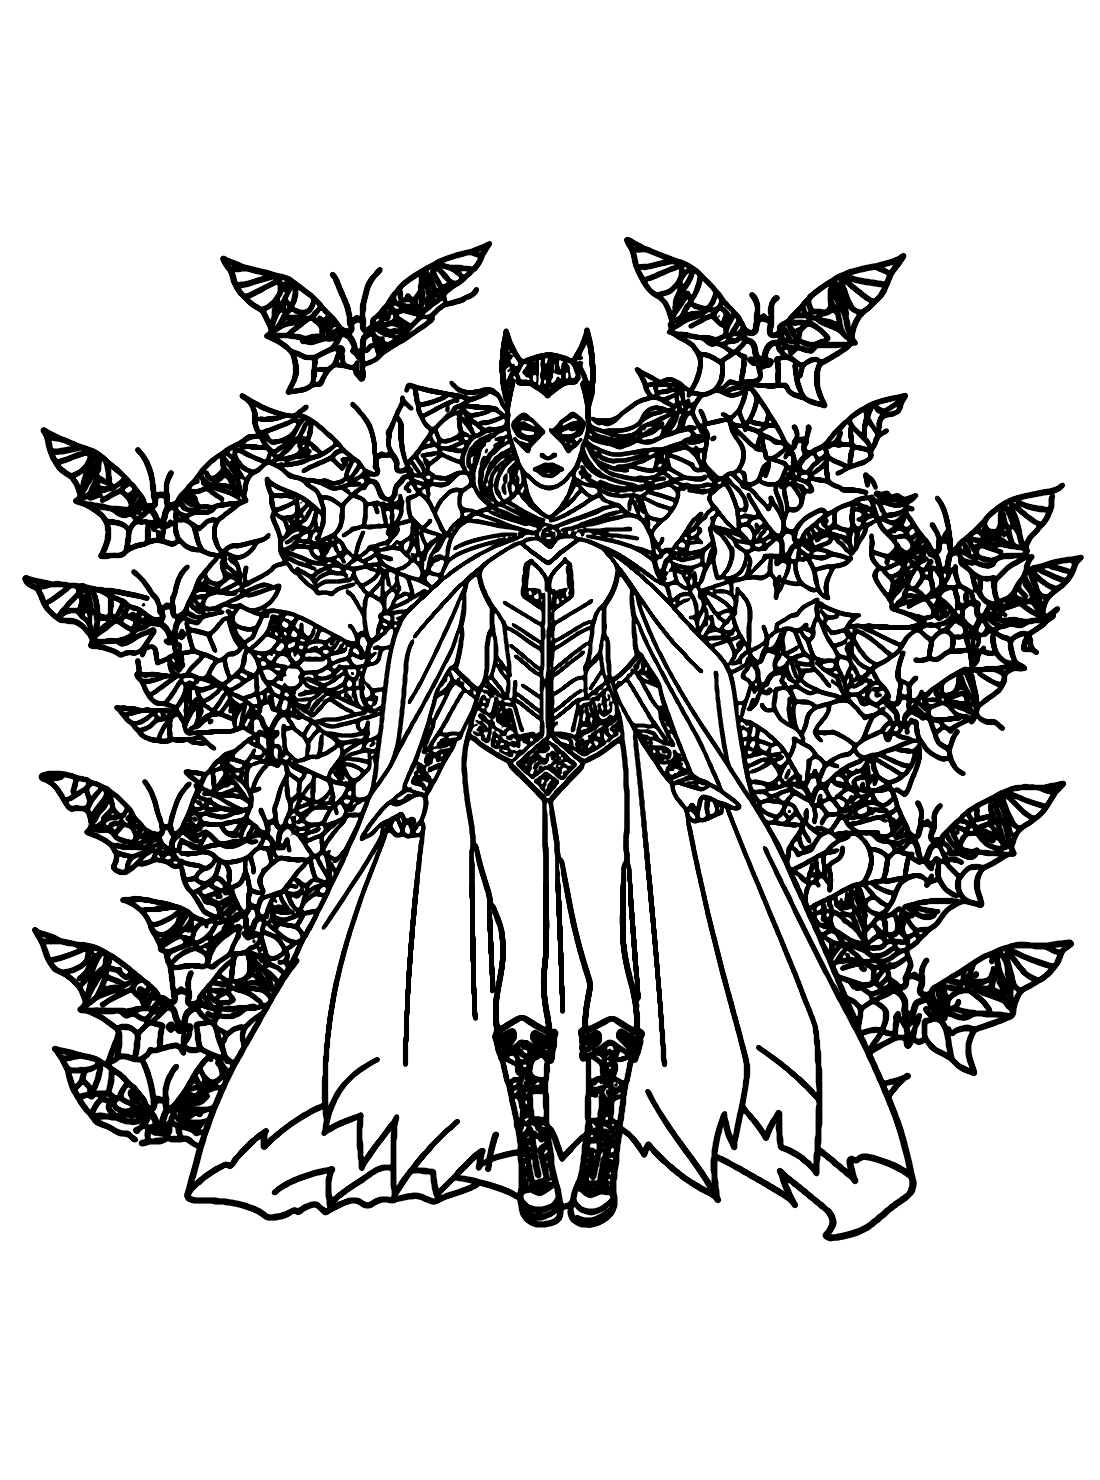 Batwoman with Bats